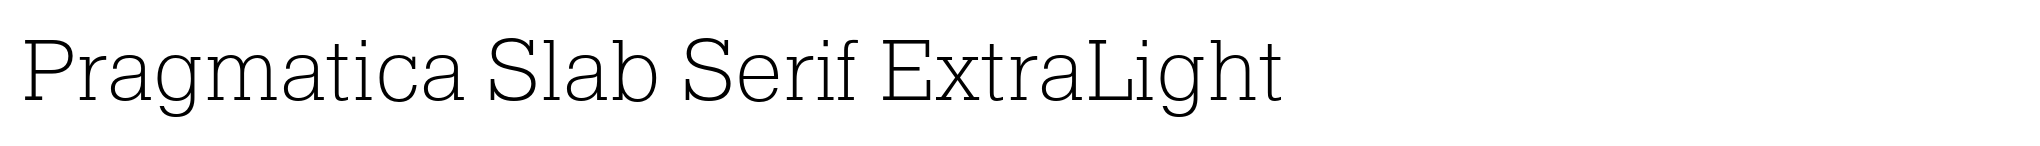 Pragmatica Slab Serif ExtraLight image